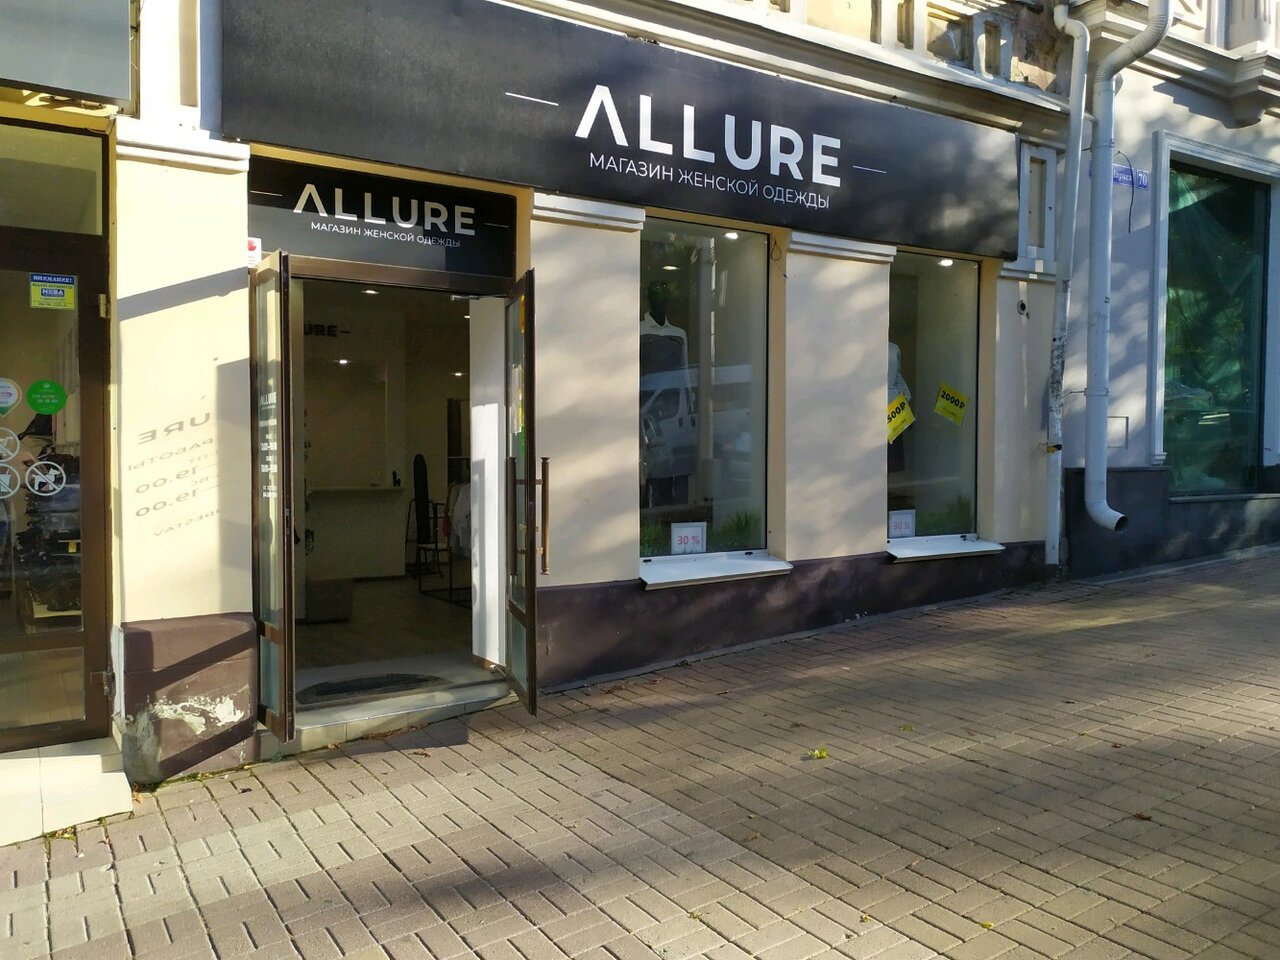 Allure Shop